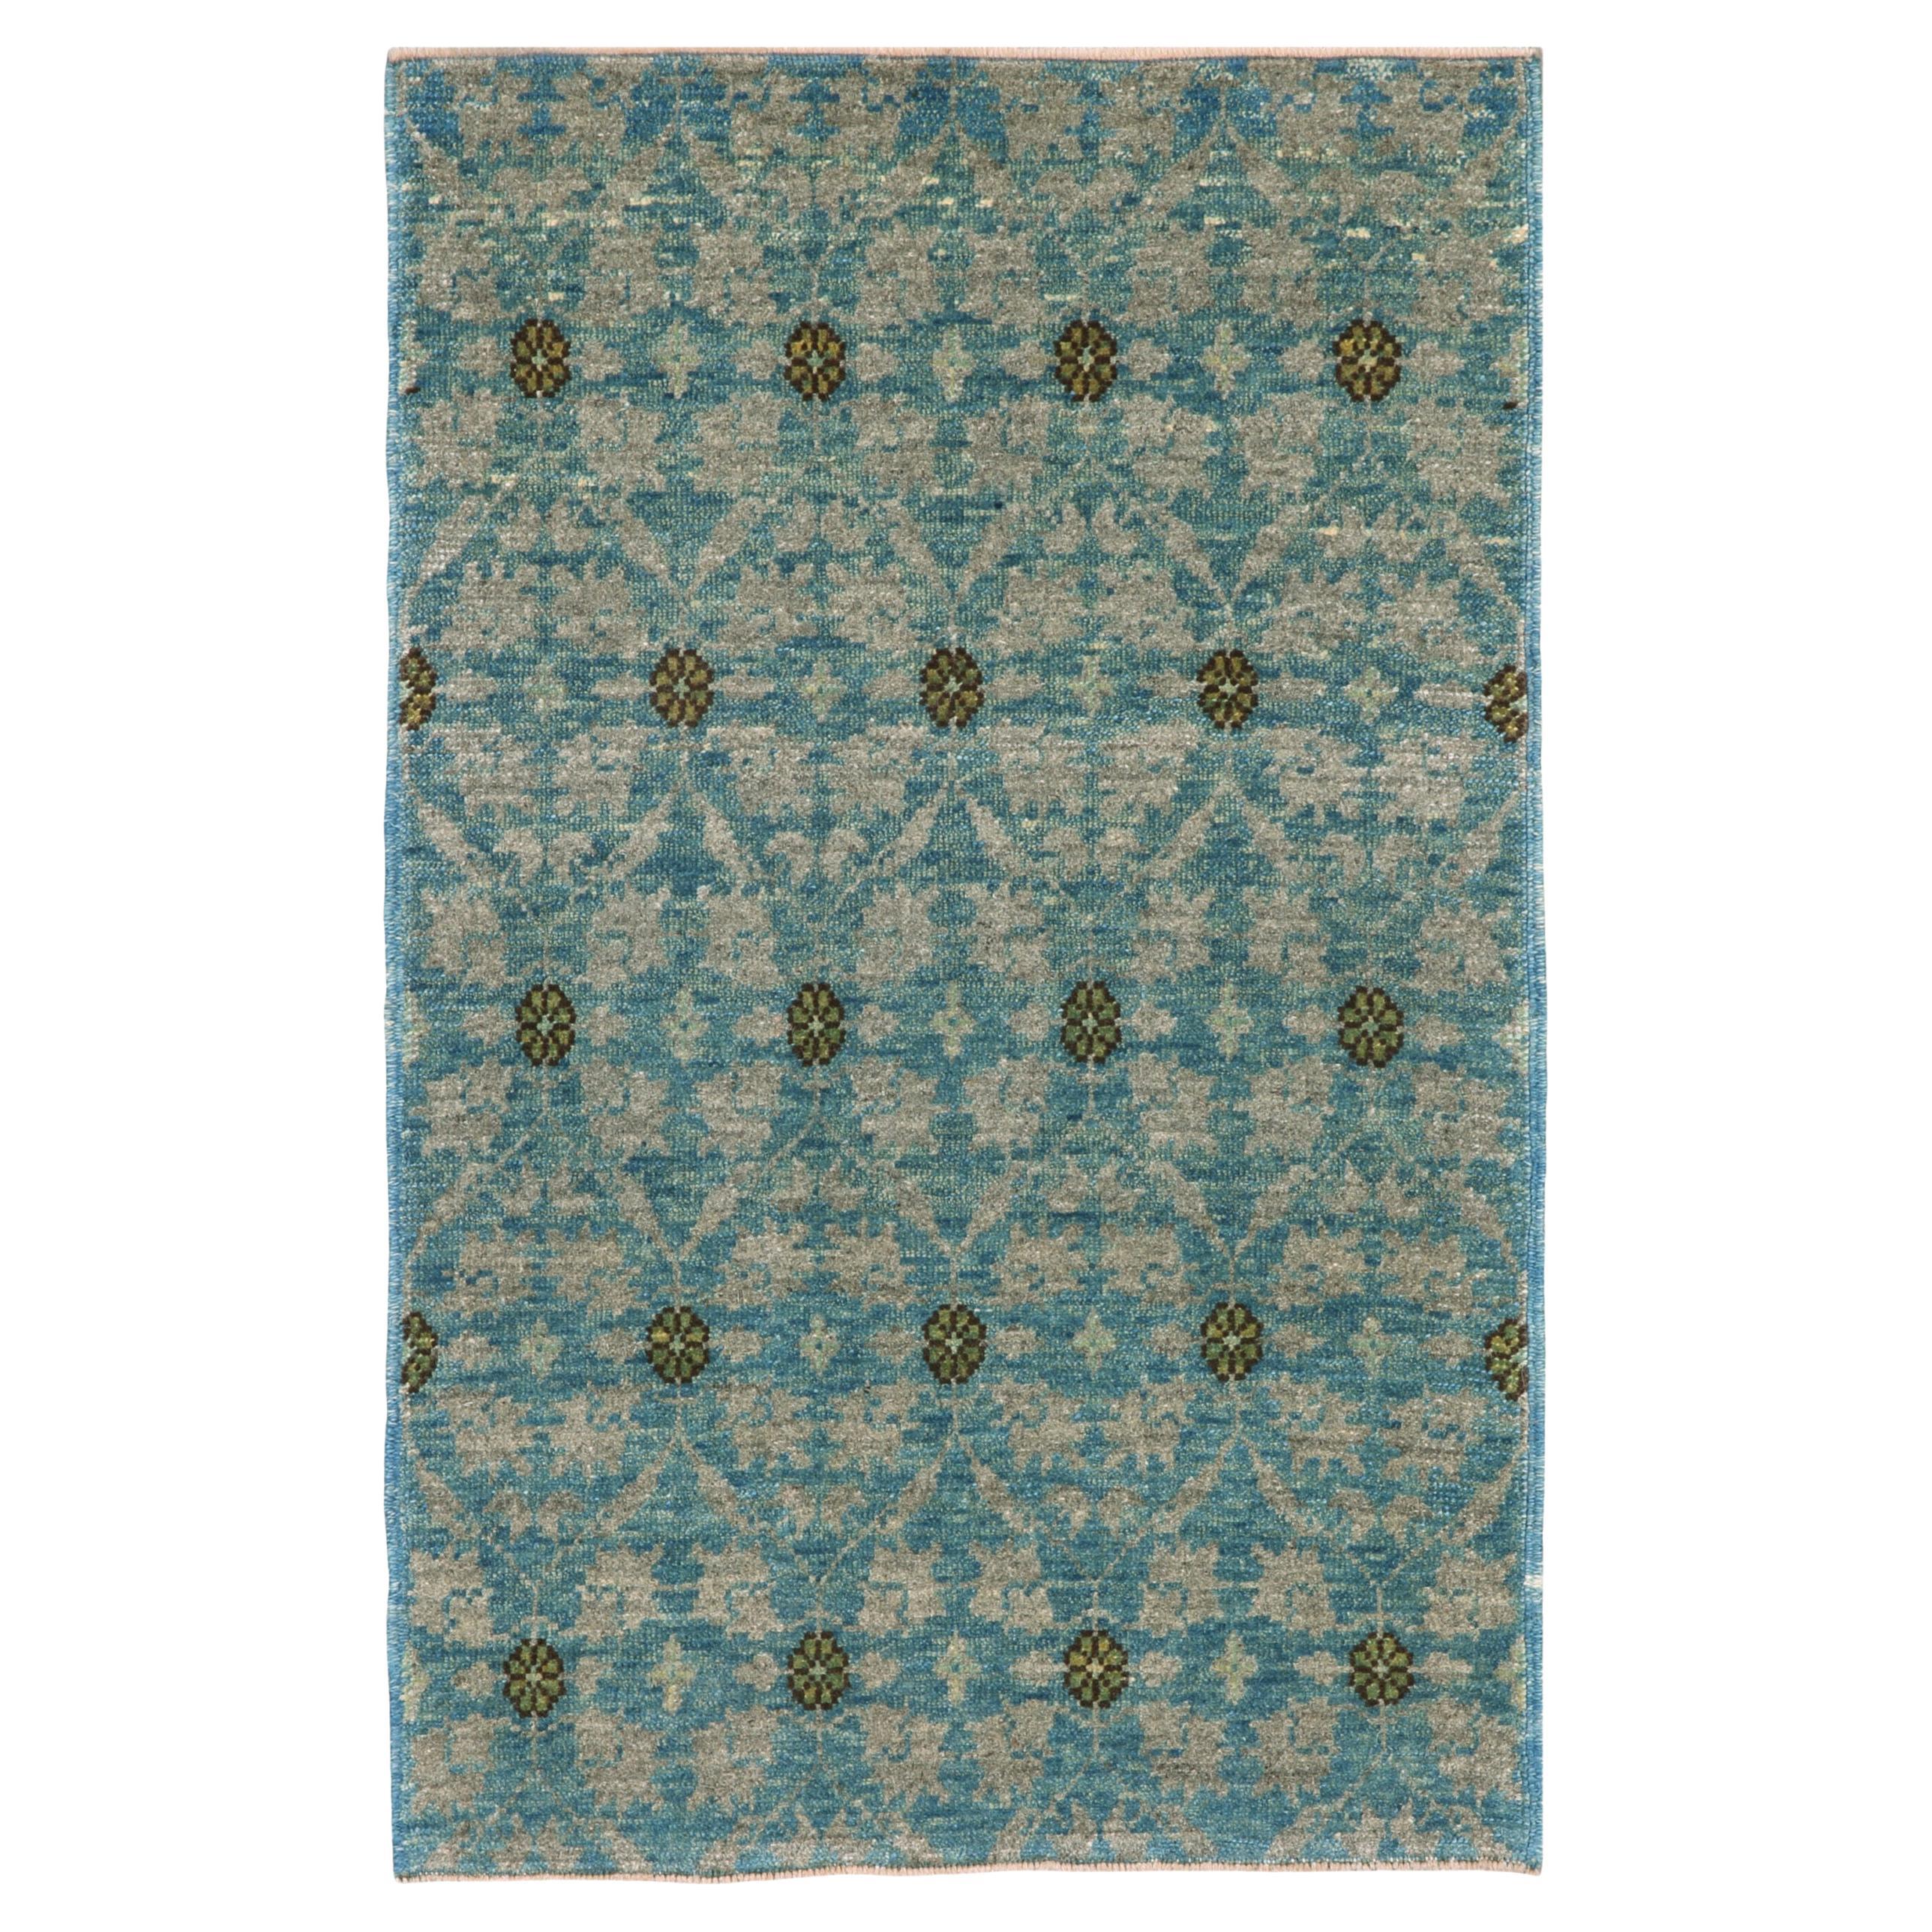 Ararat Kollektion – Mamluk Wagireh Teppich mit Blumengitter, Naturfarben im Angebot